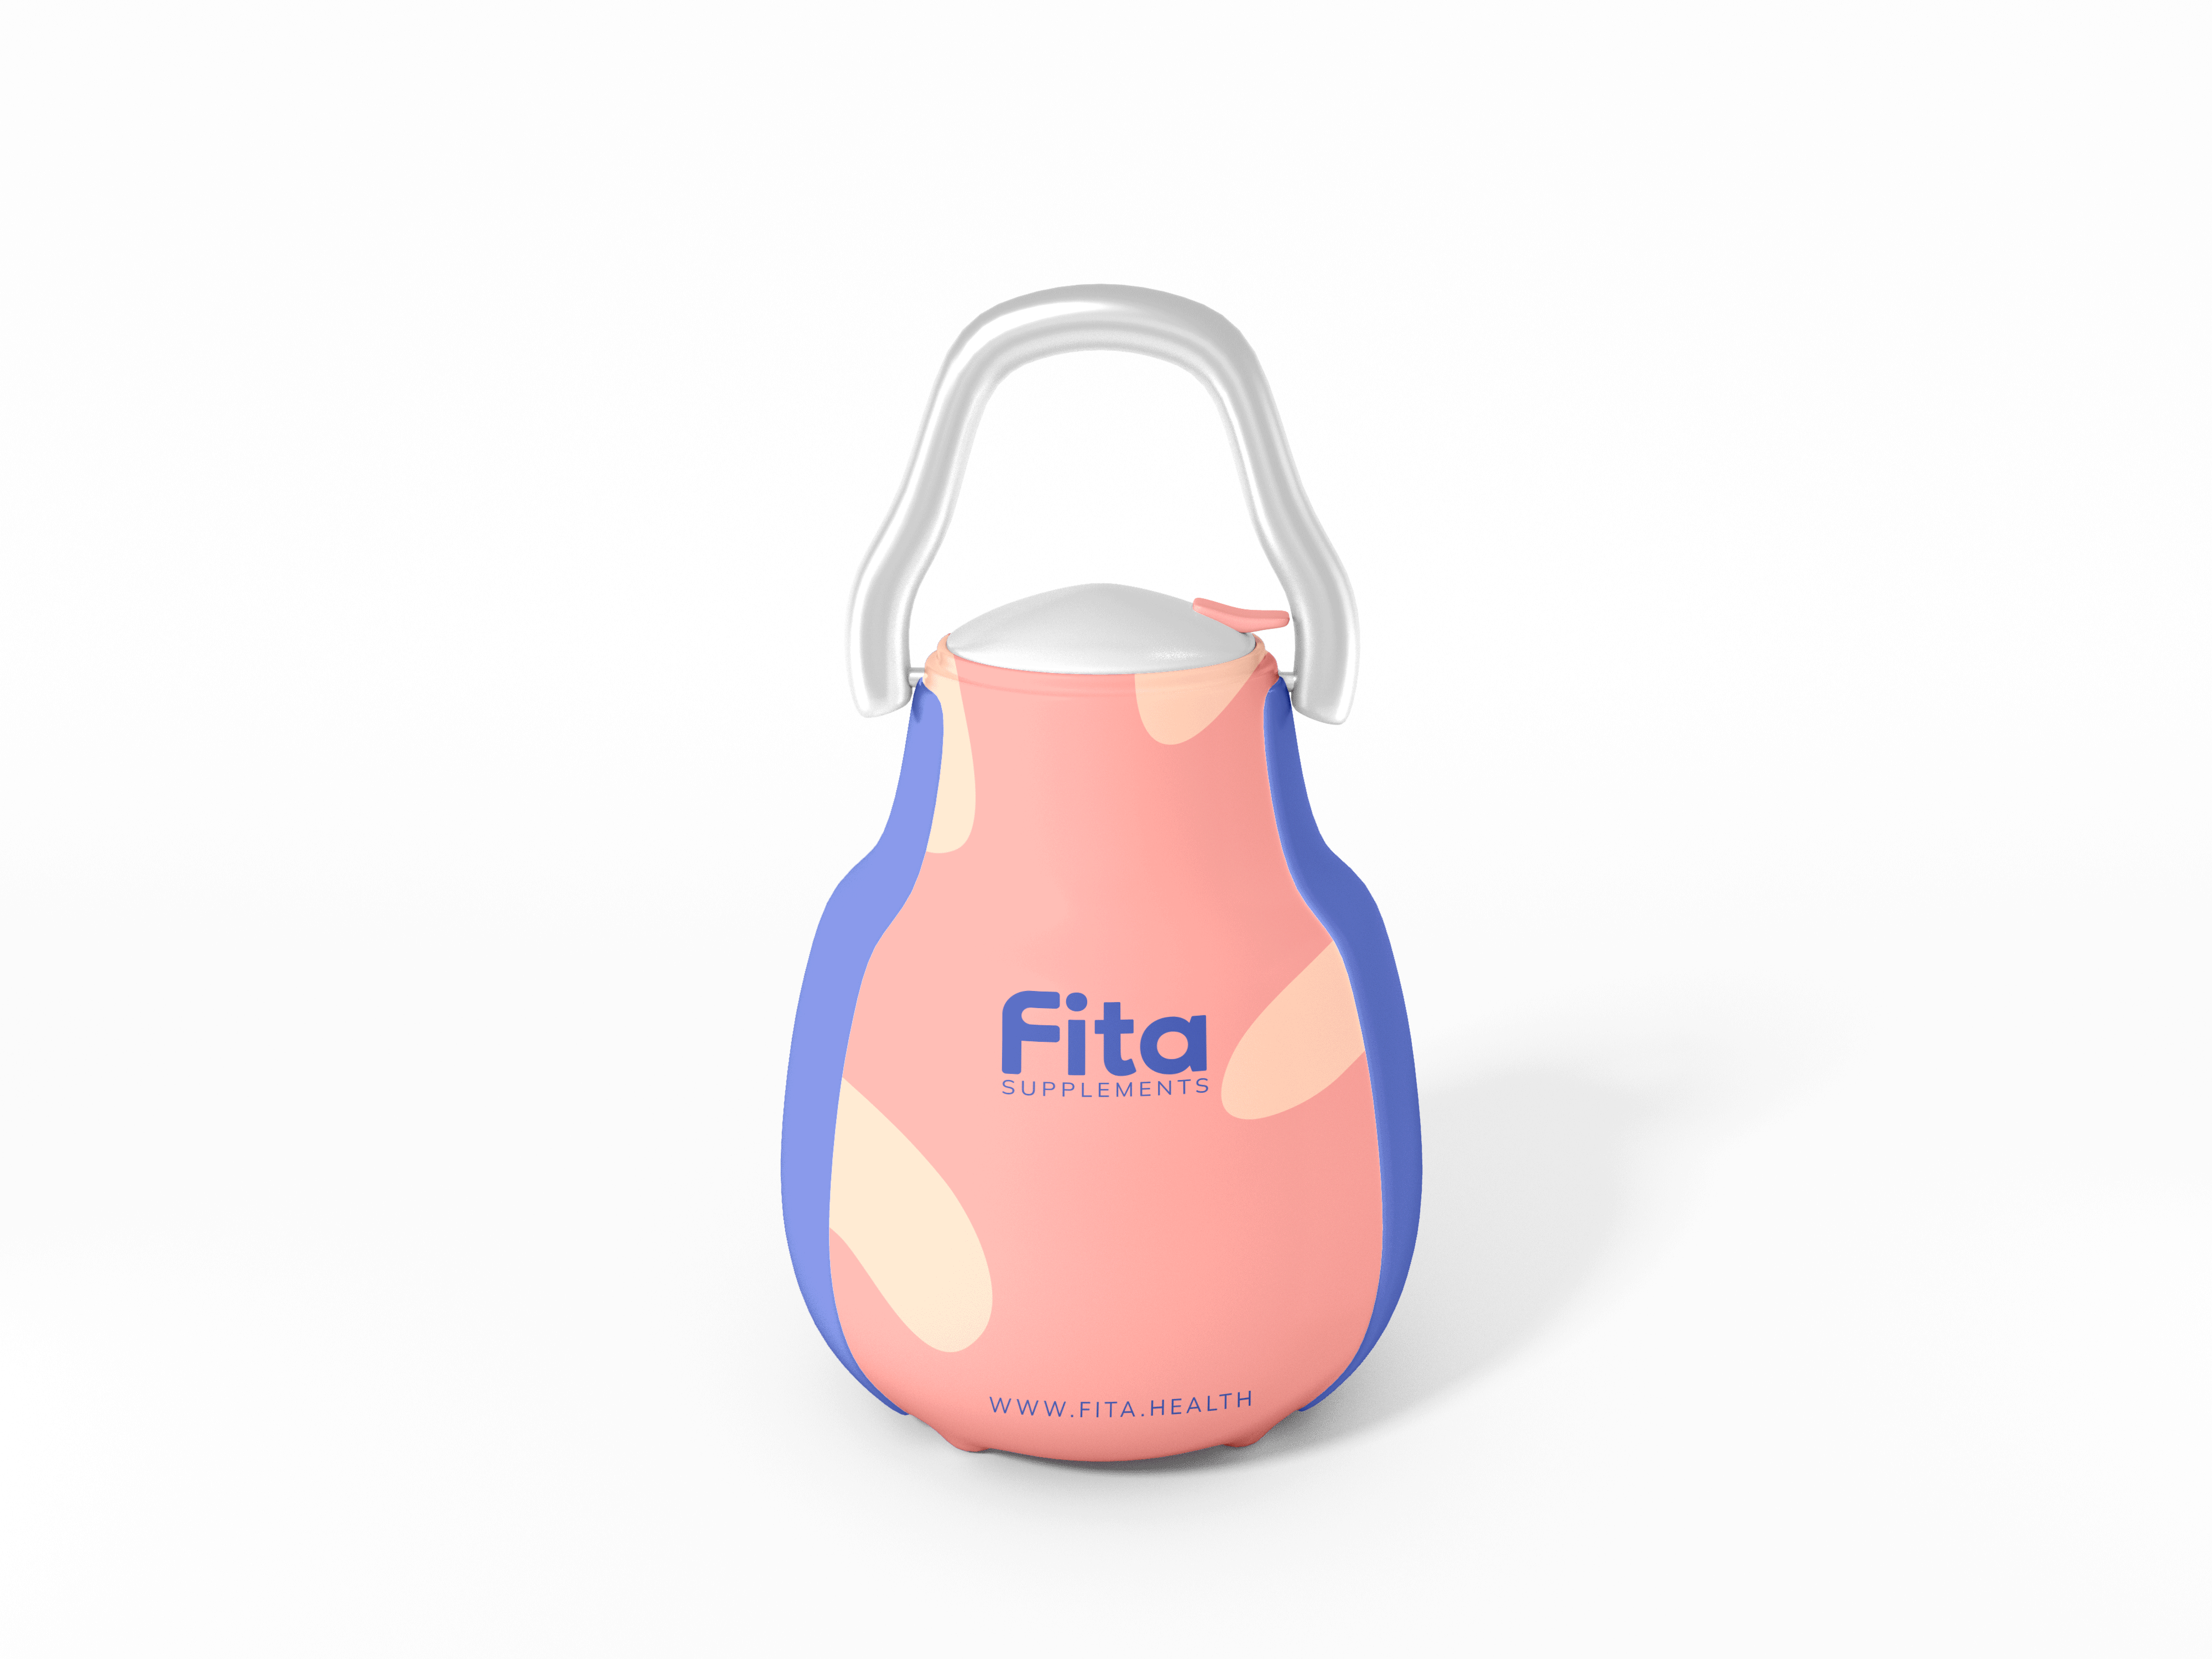 Fita - Brand Identity Design brand identity brand identity design branding design food supplement brand graphic design logo